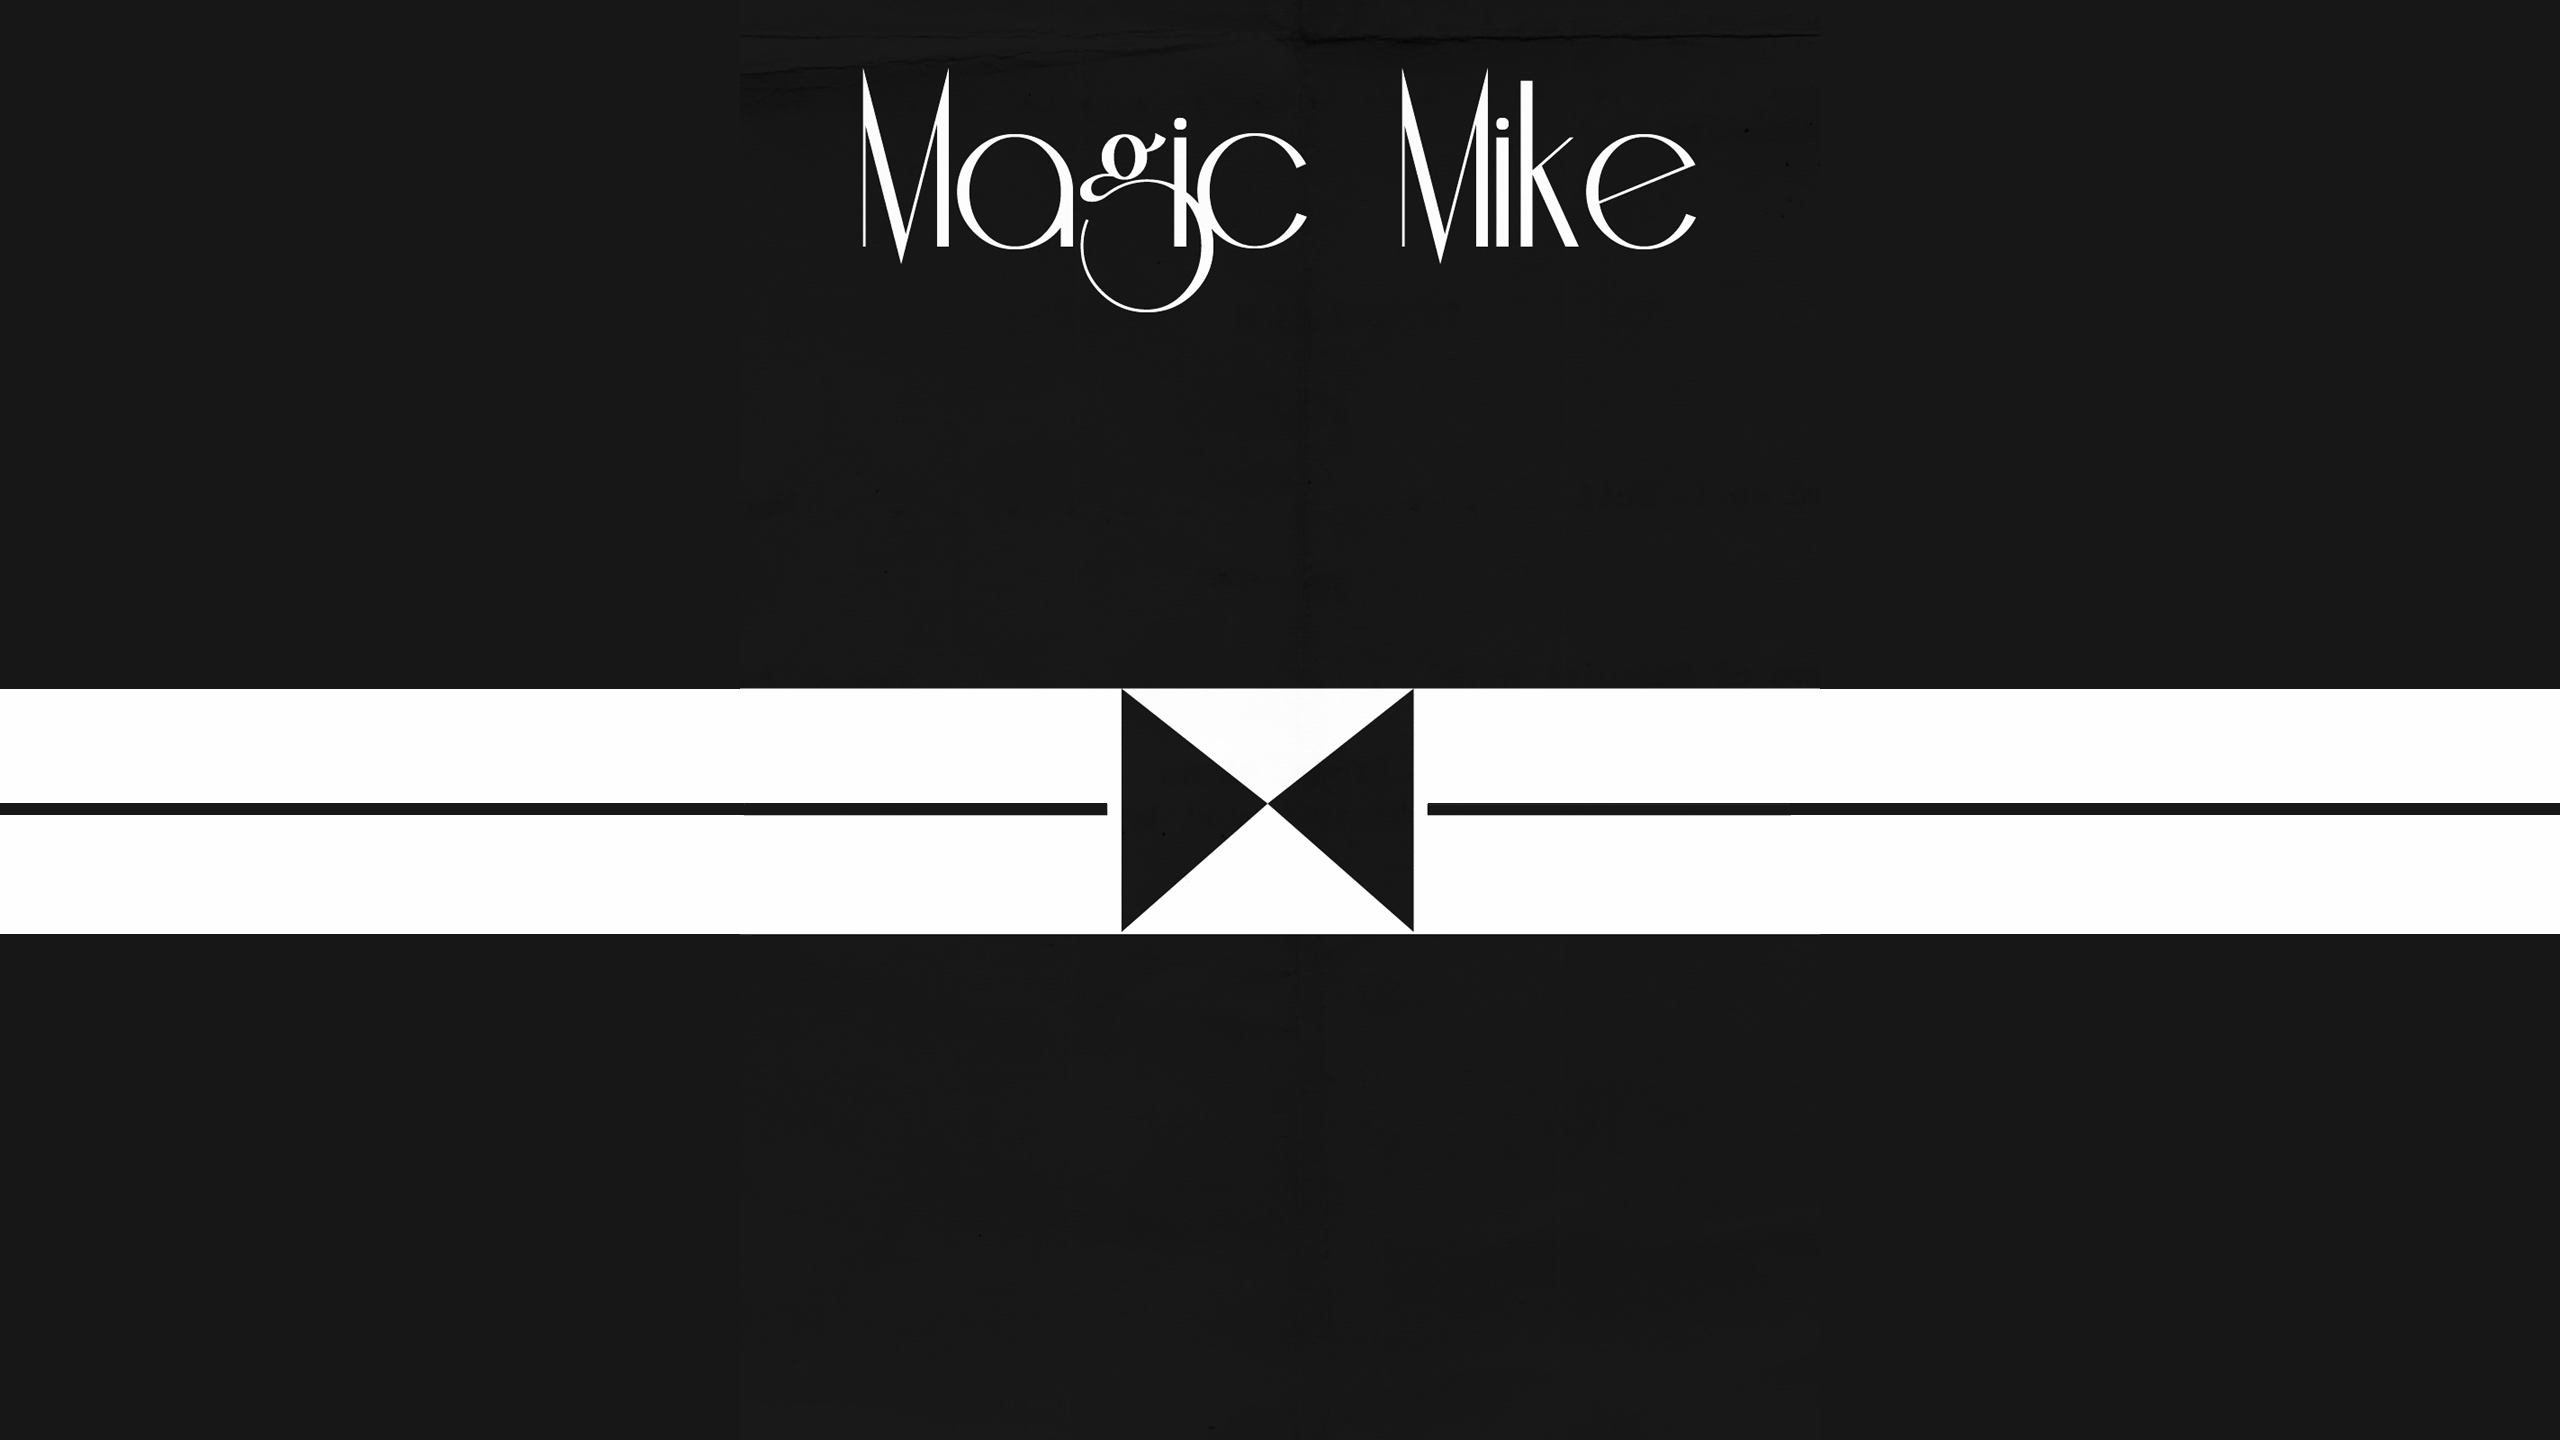 Movie Magic Mike 2560x1440